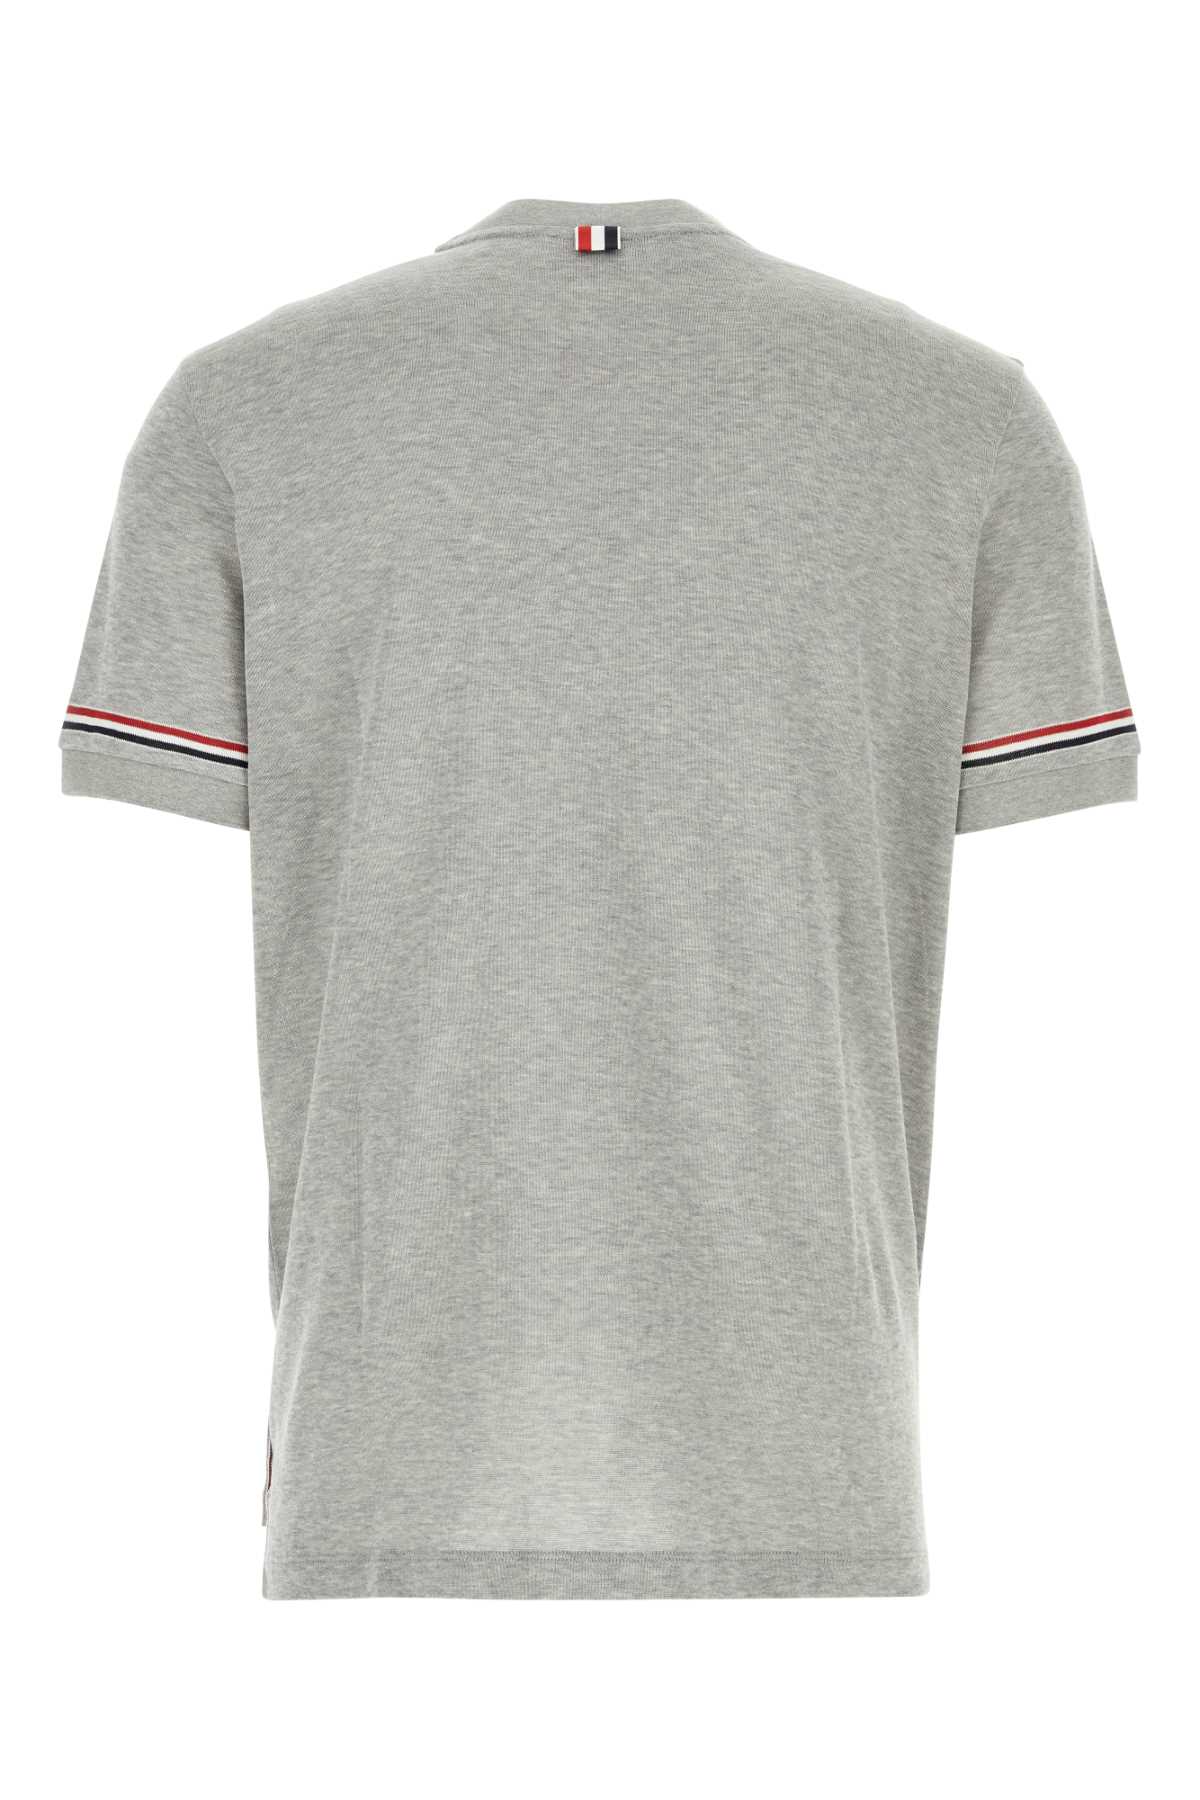 Thom Browne Grey Cotton T-shirt In Medgrey